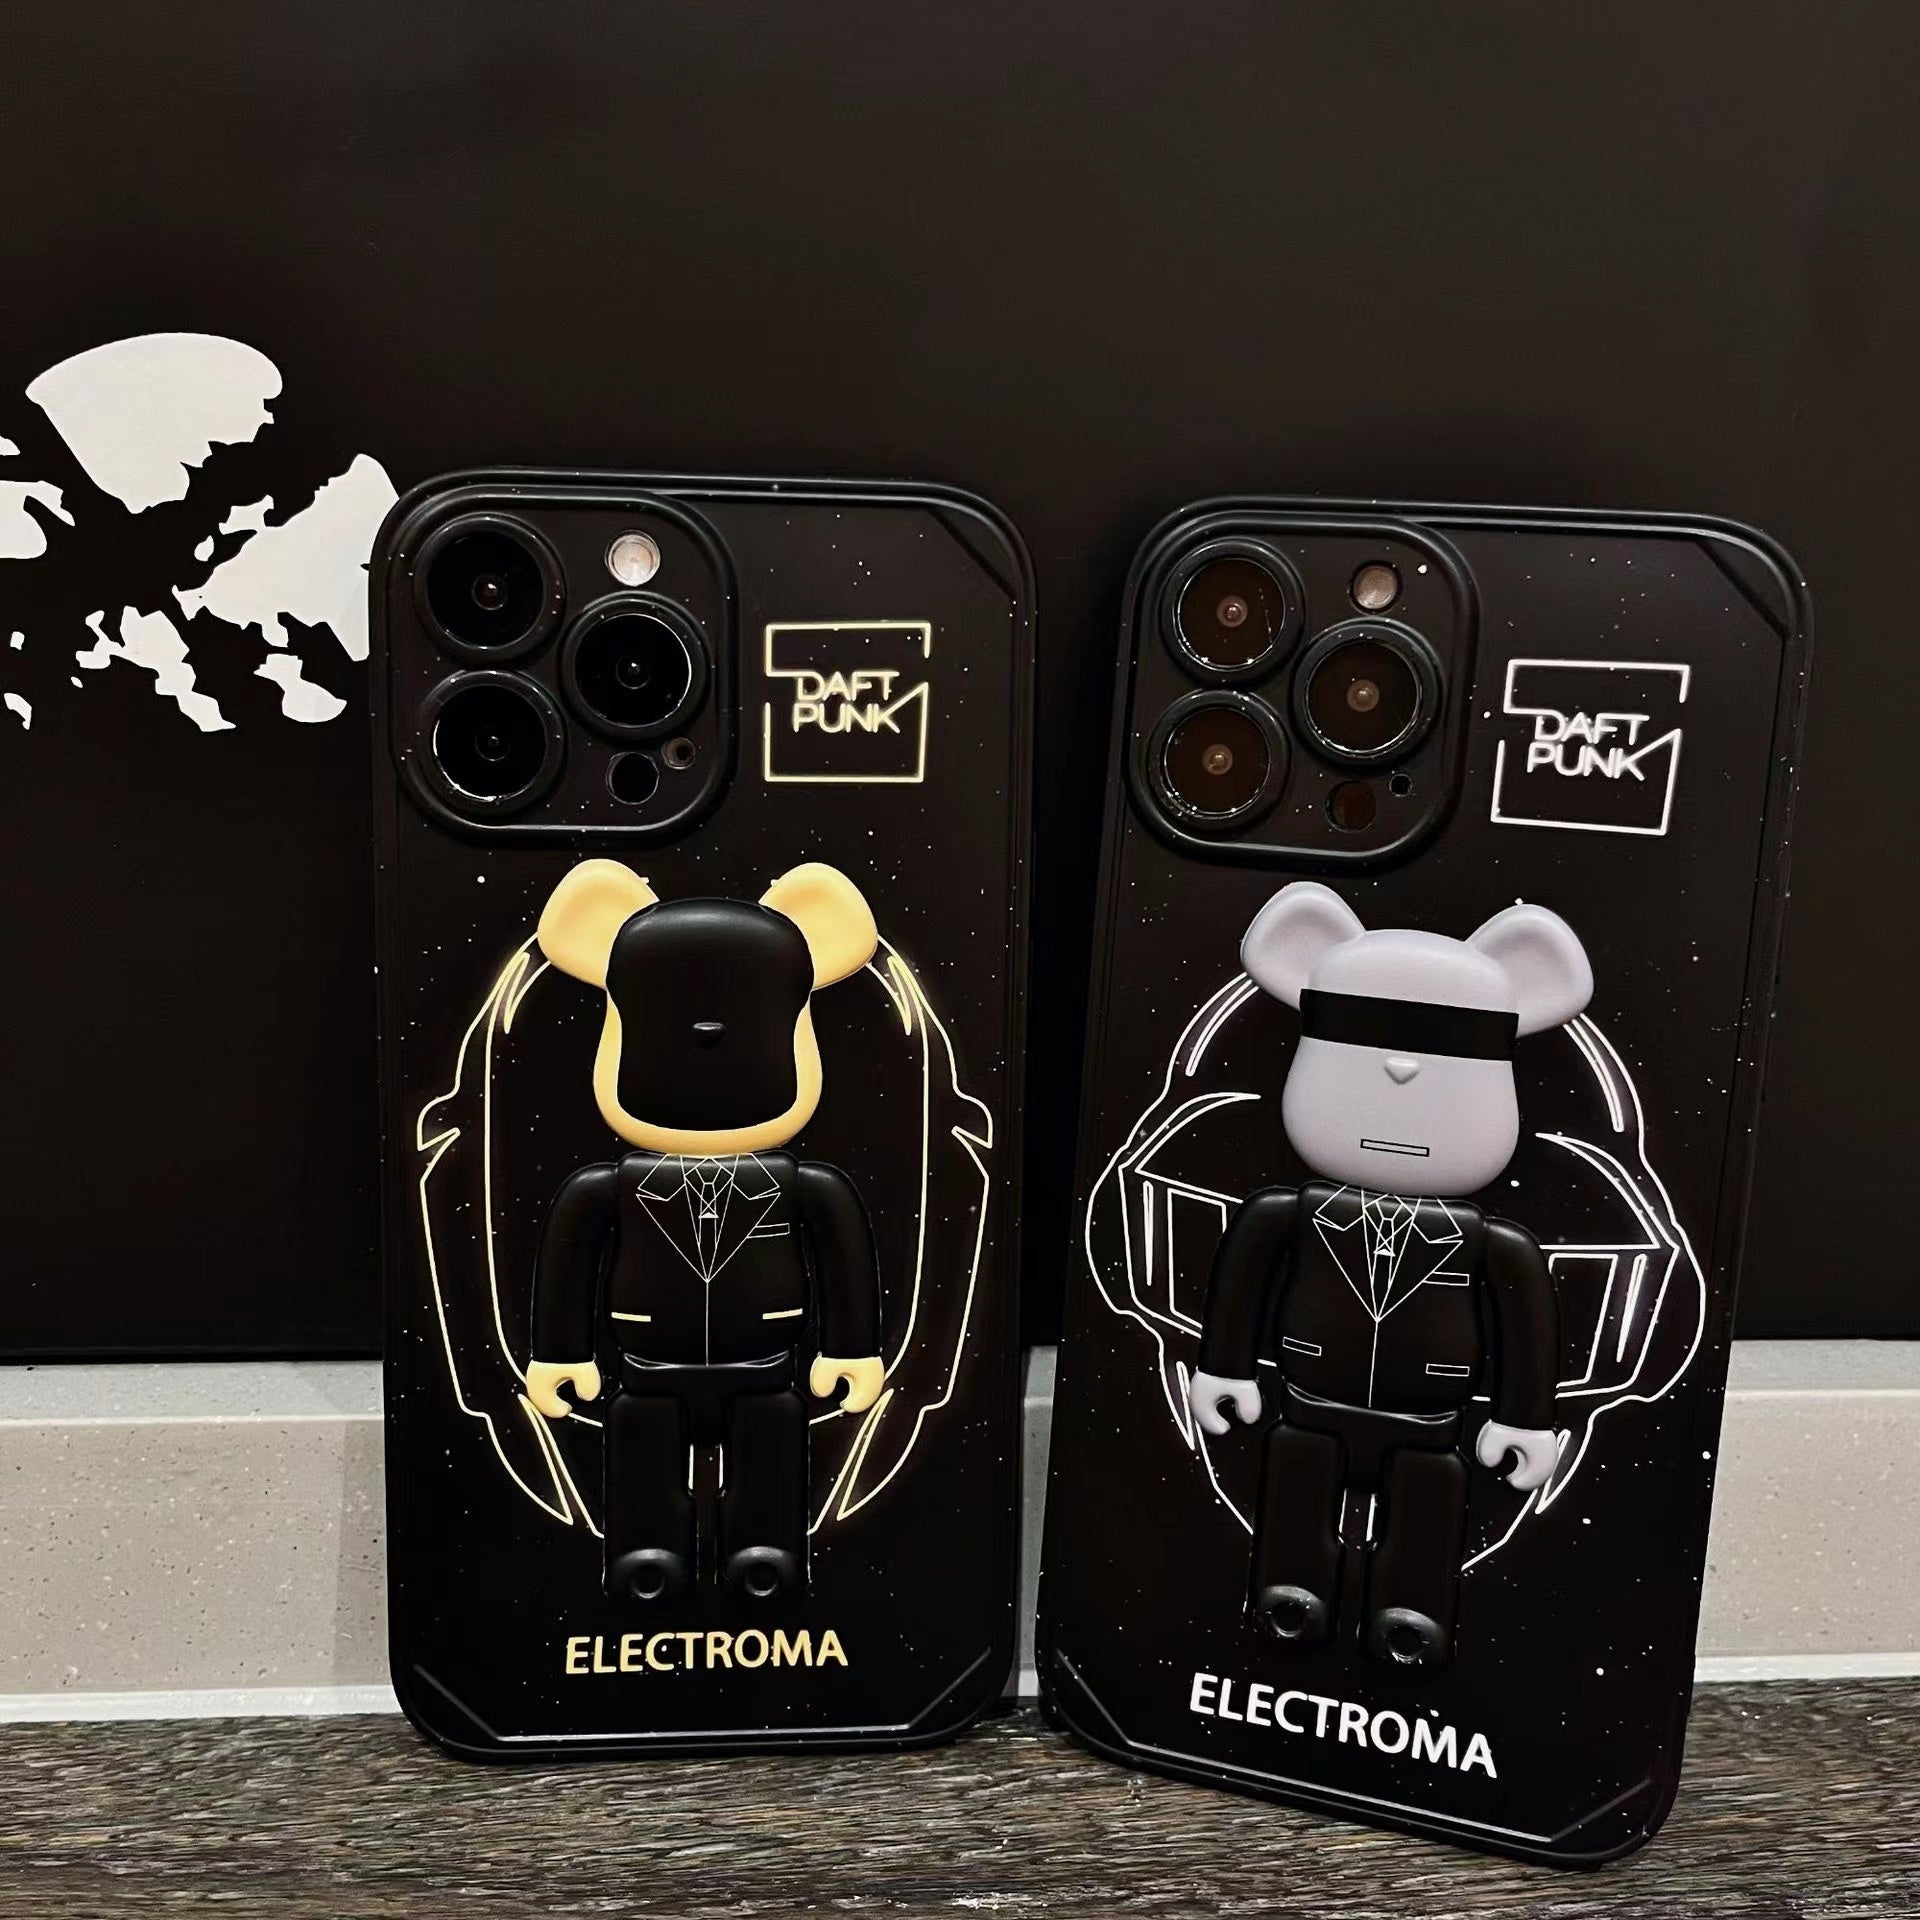 3D Daft Punk Electroma Phone Case